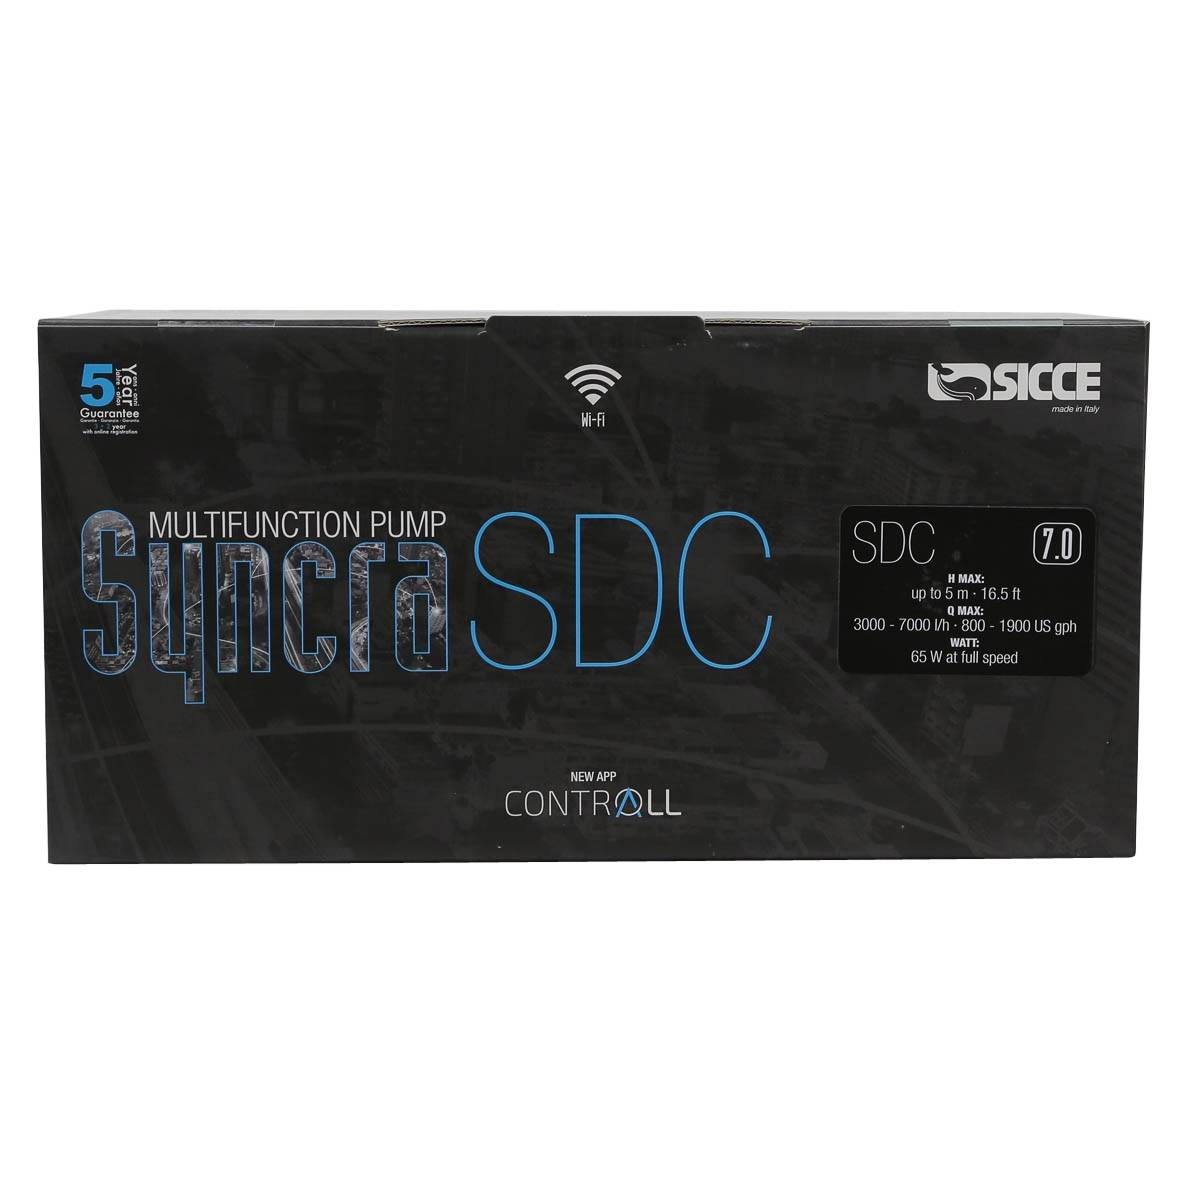 Syncra SDC 7.0 WiFi Controllable Pump (800-1900 GPH) - Sicce